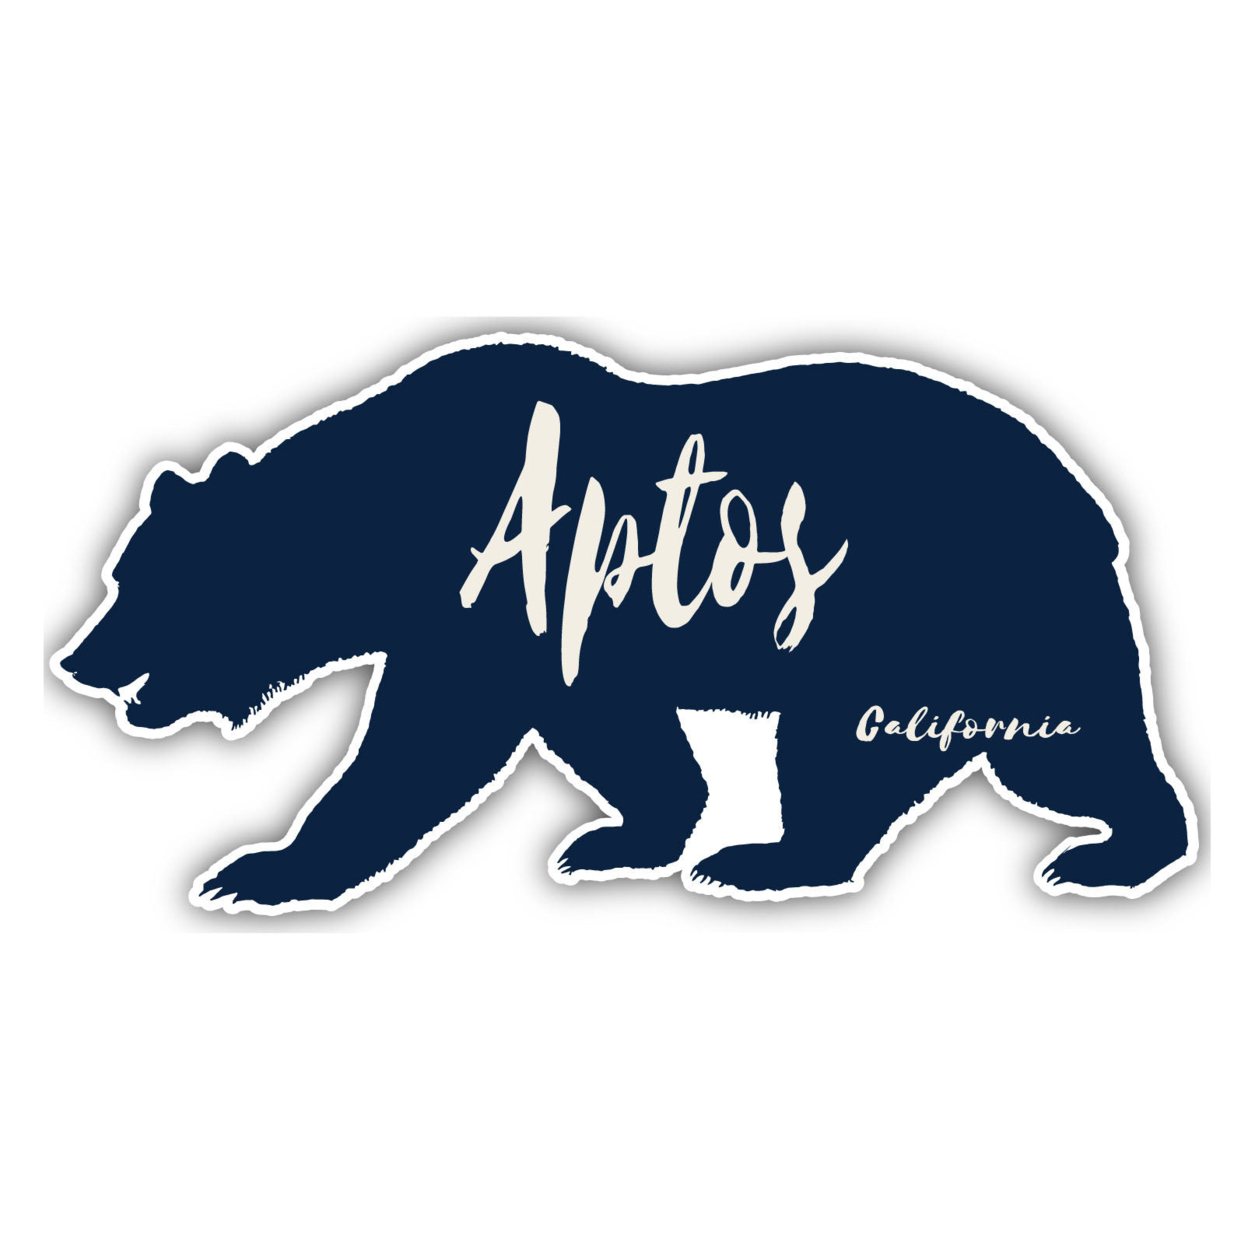 Aptos California Souvenir Decorative Stickers (Choose Theme And Size) - 4-Pack, 4-Inch, Tent